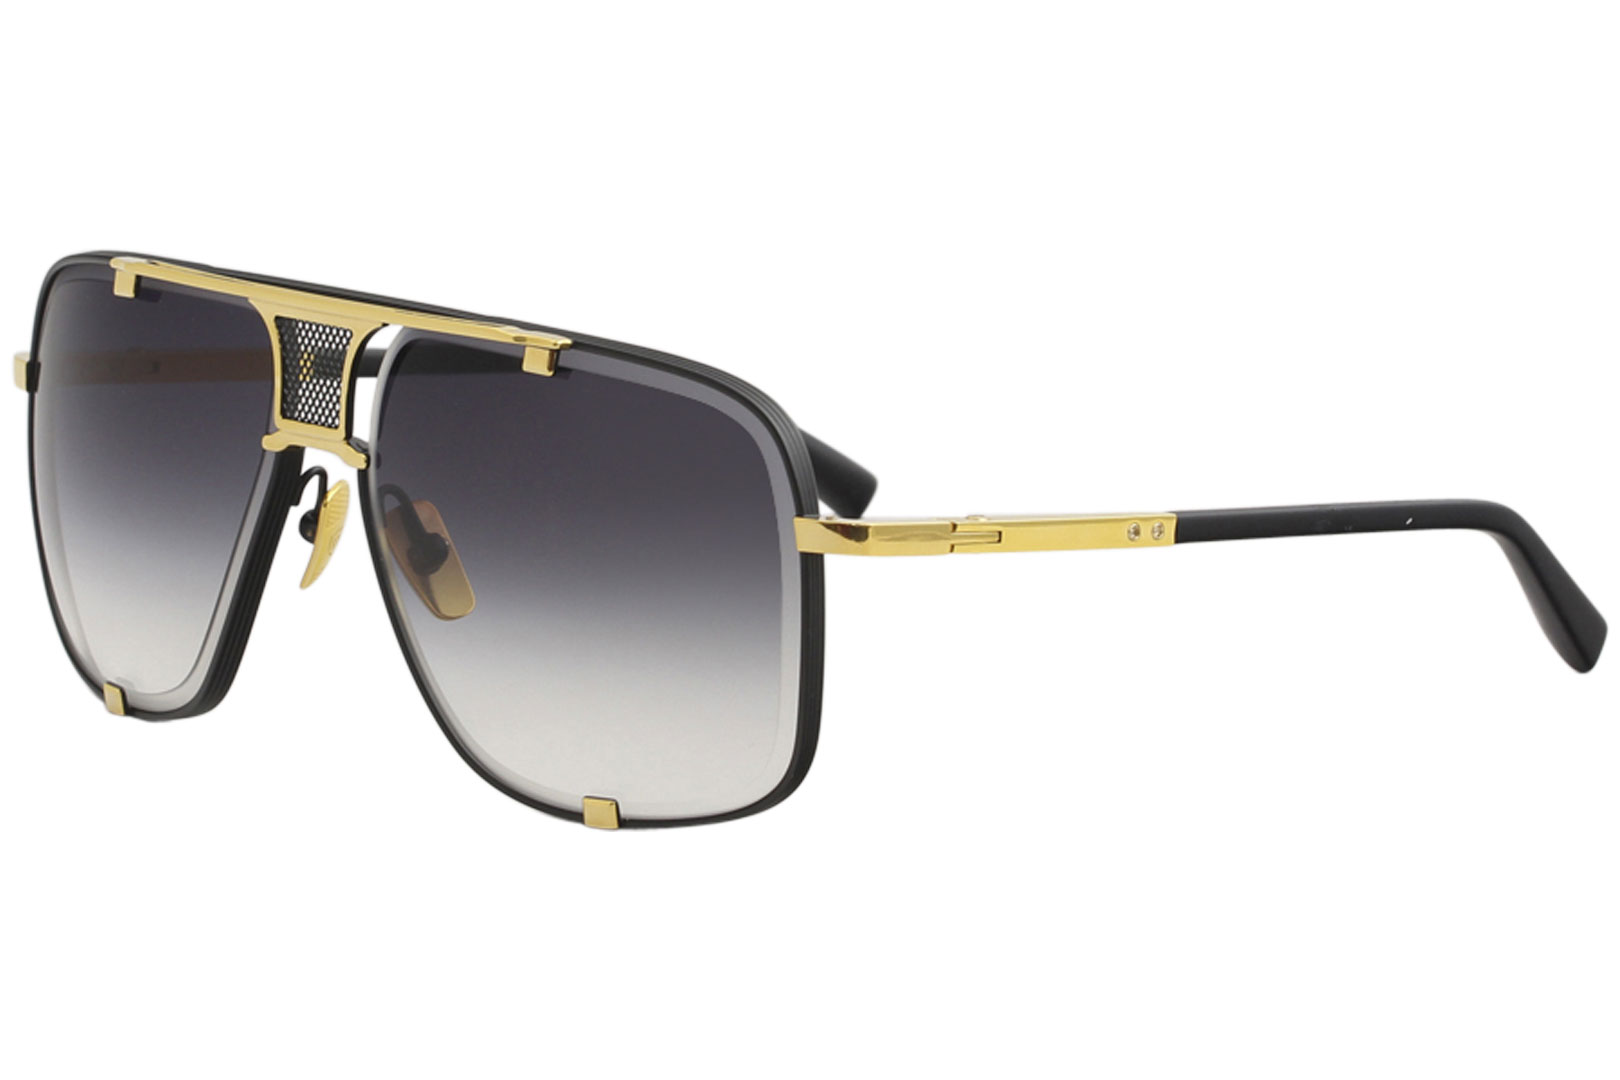 Distributie weduwnaar Licht Dita Men's Mach-Five DRX-2087 18K Gold Fashion Pilot Titanium Sunglasses |  EyeSpecs.com